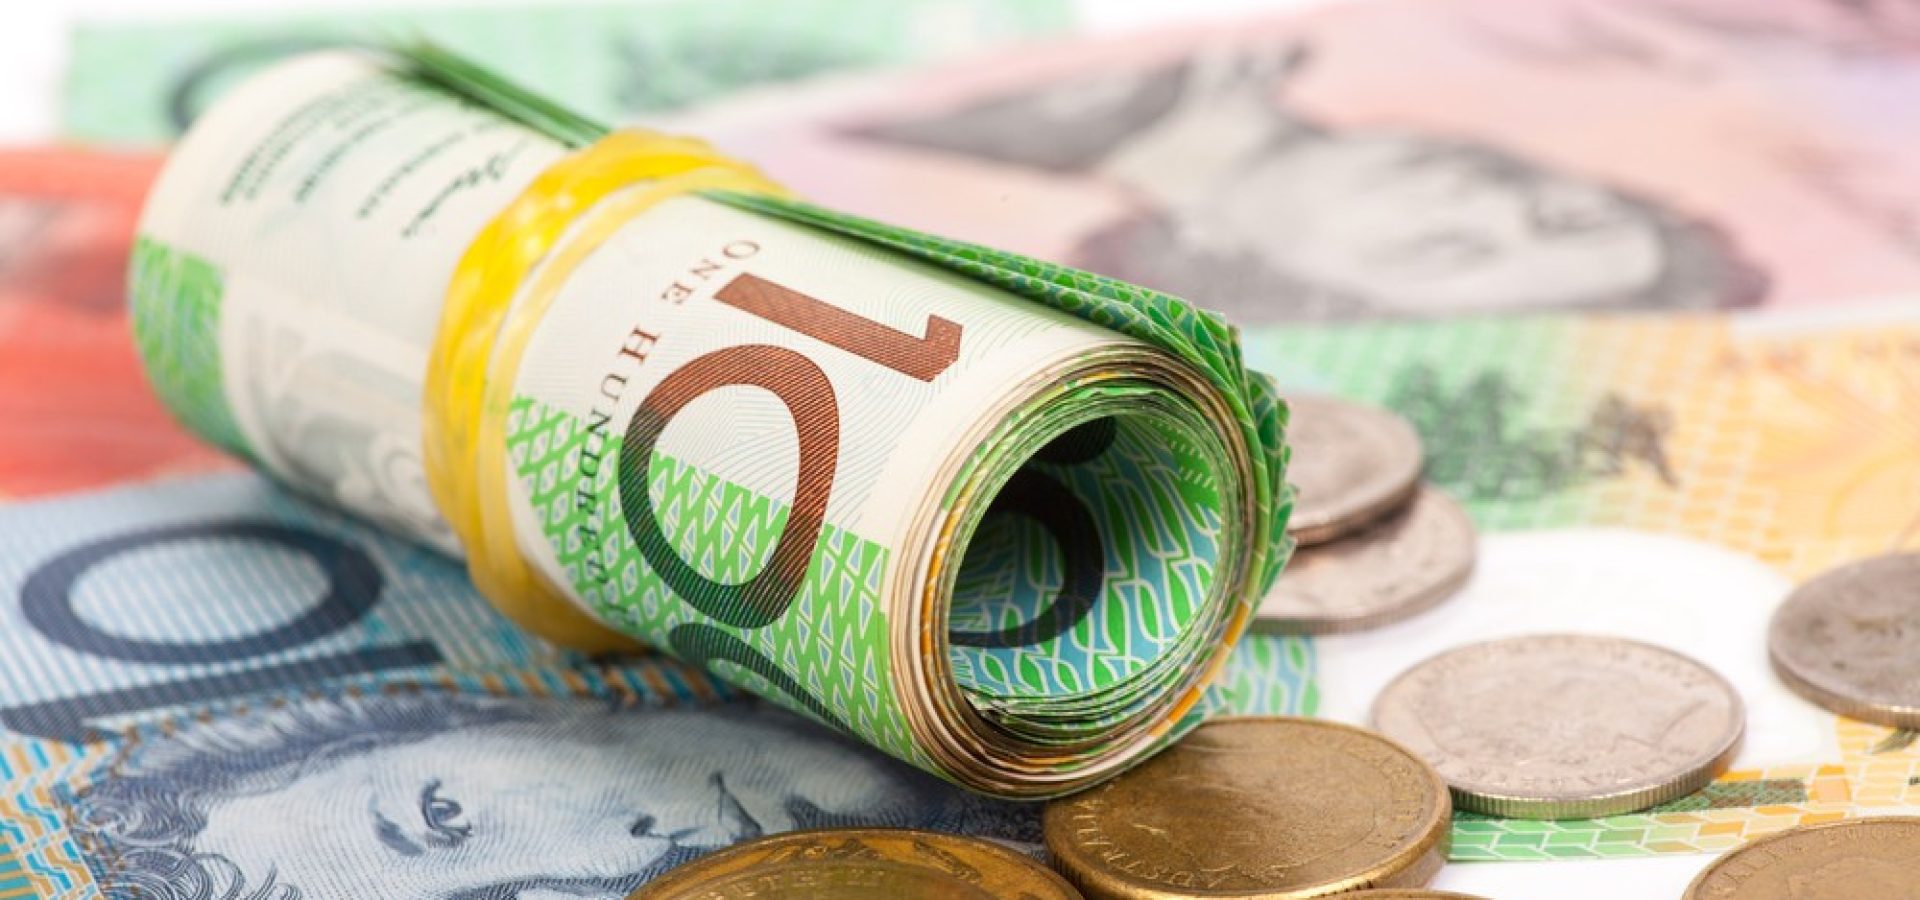 Wibest – Australian Money: Australian dollar coins and bills.